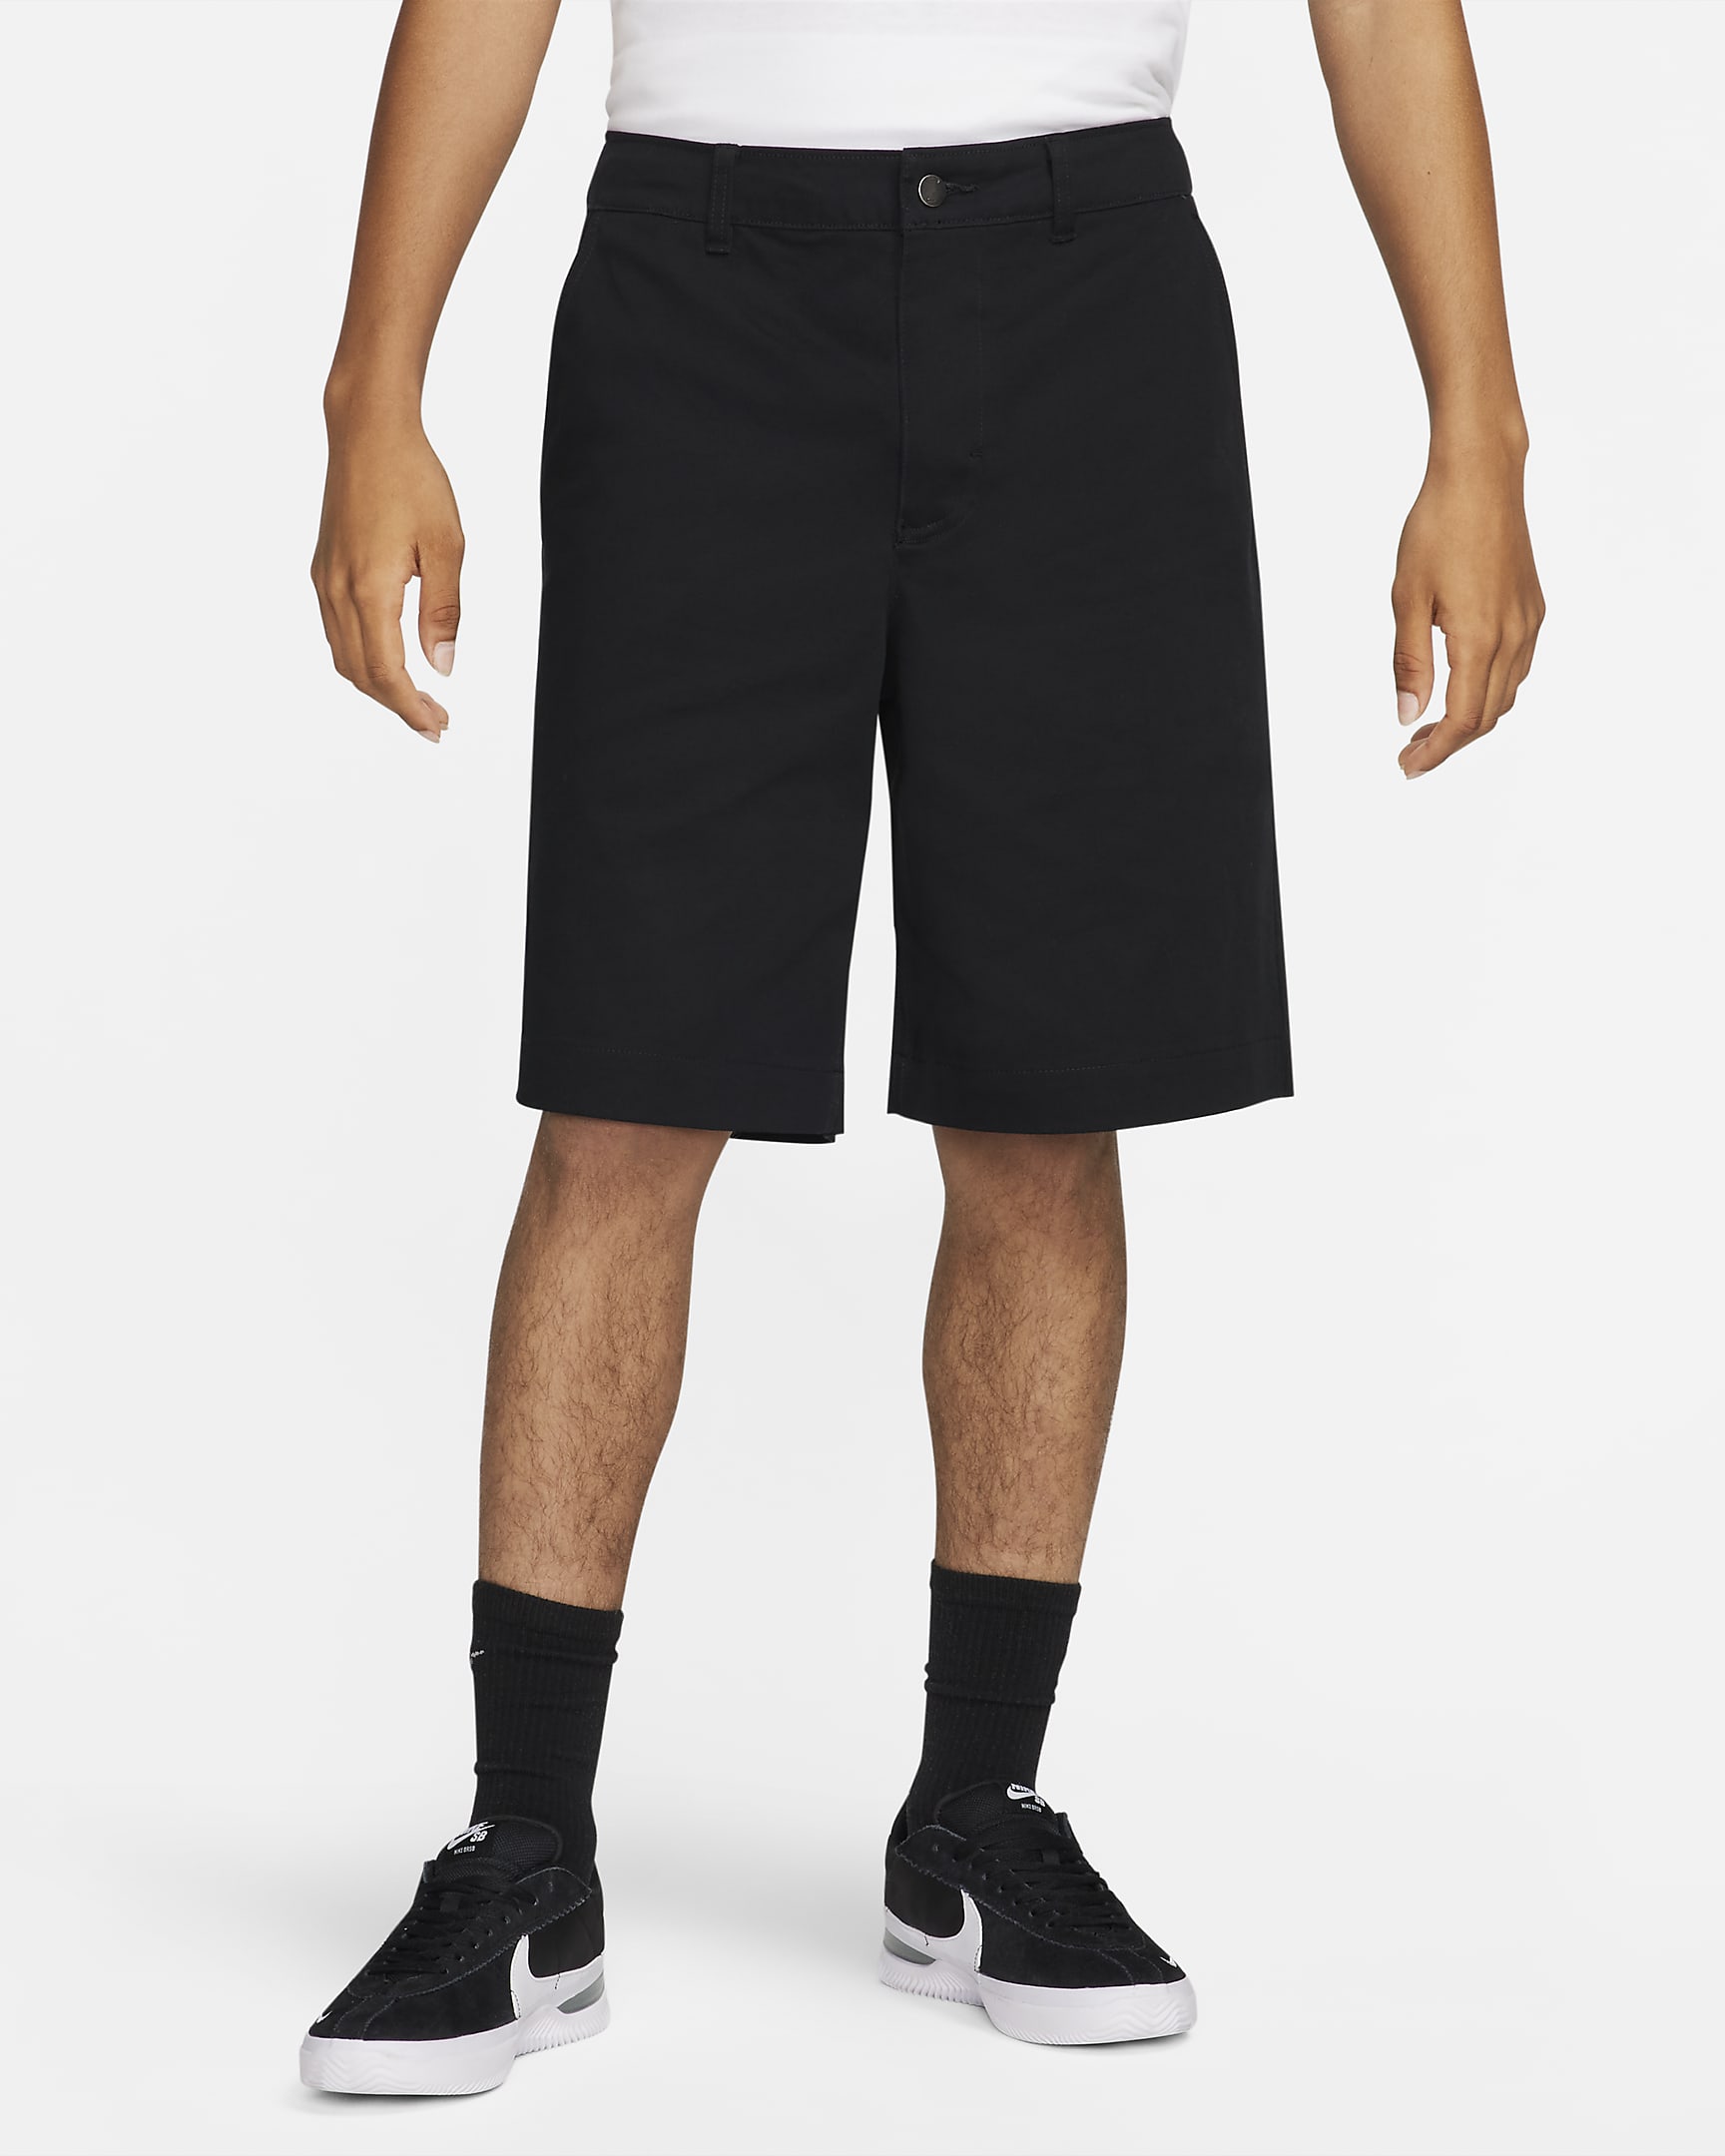 Nike SB Men's El Chino Skate Shorts - Black